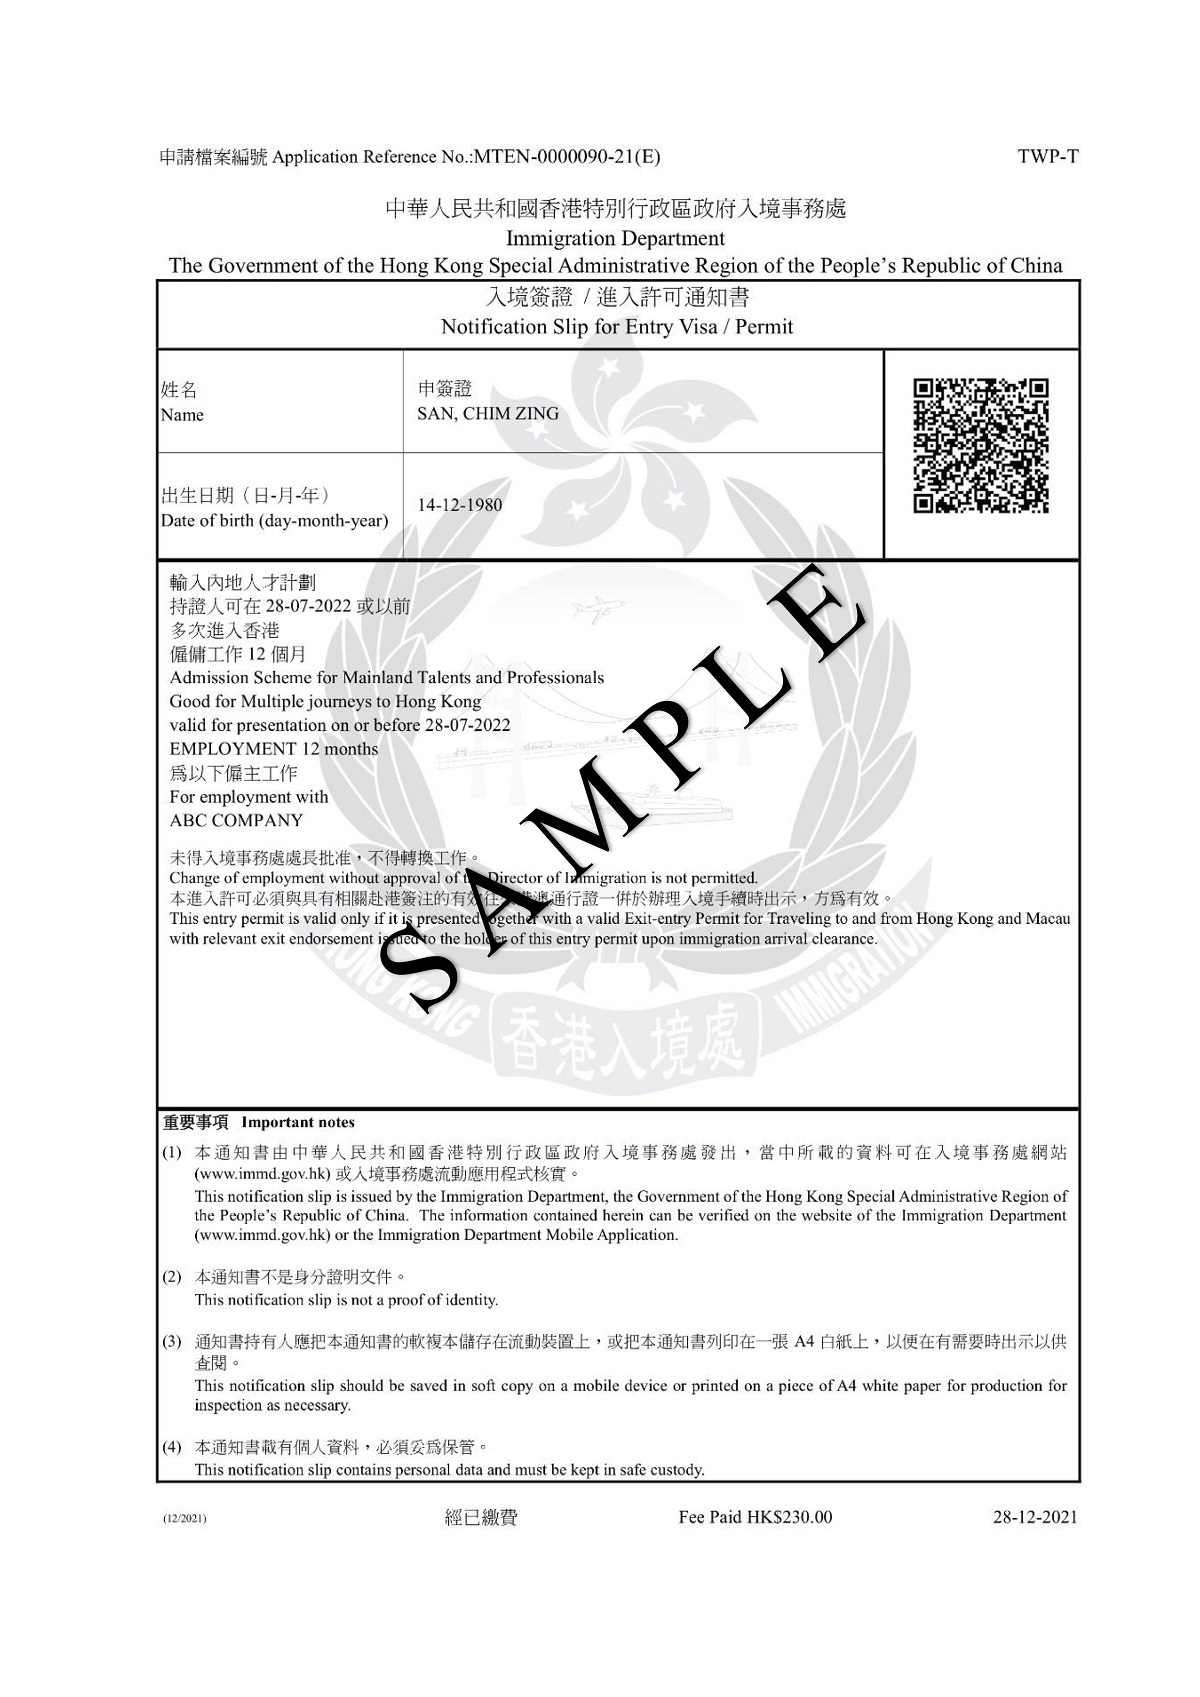 Notification Slip for Entry Visa/Permit (Sample)